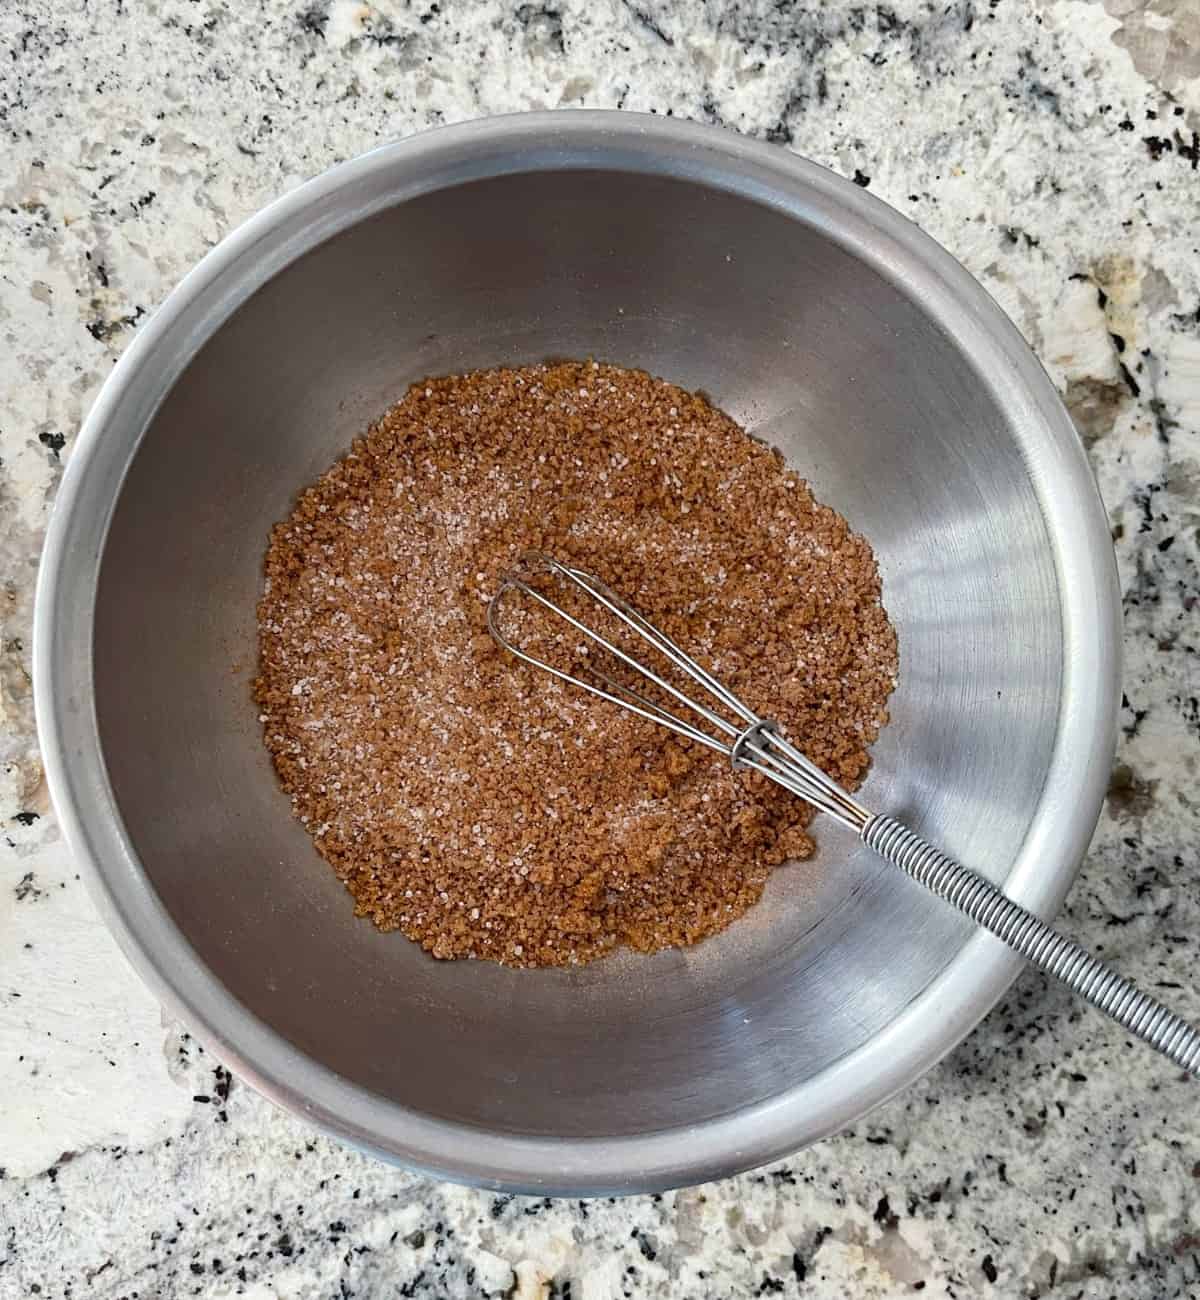 Whisking Truvia brown sugar, Truvia baking blend and cinnamon in mixing bowl.